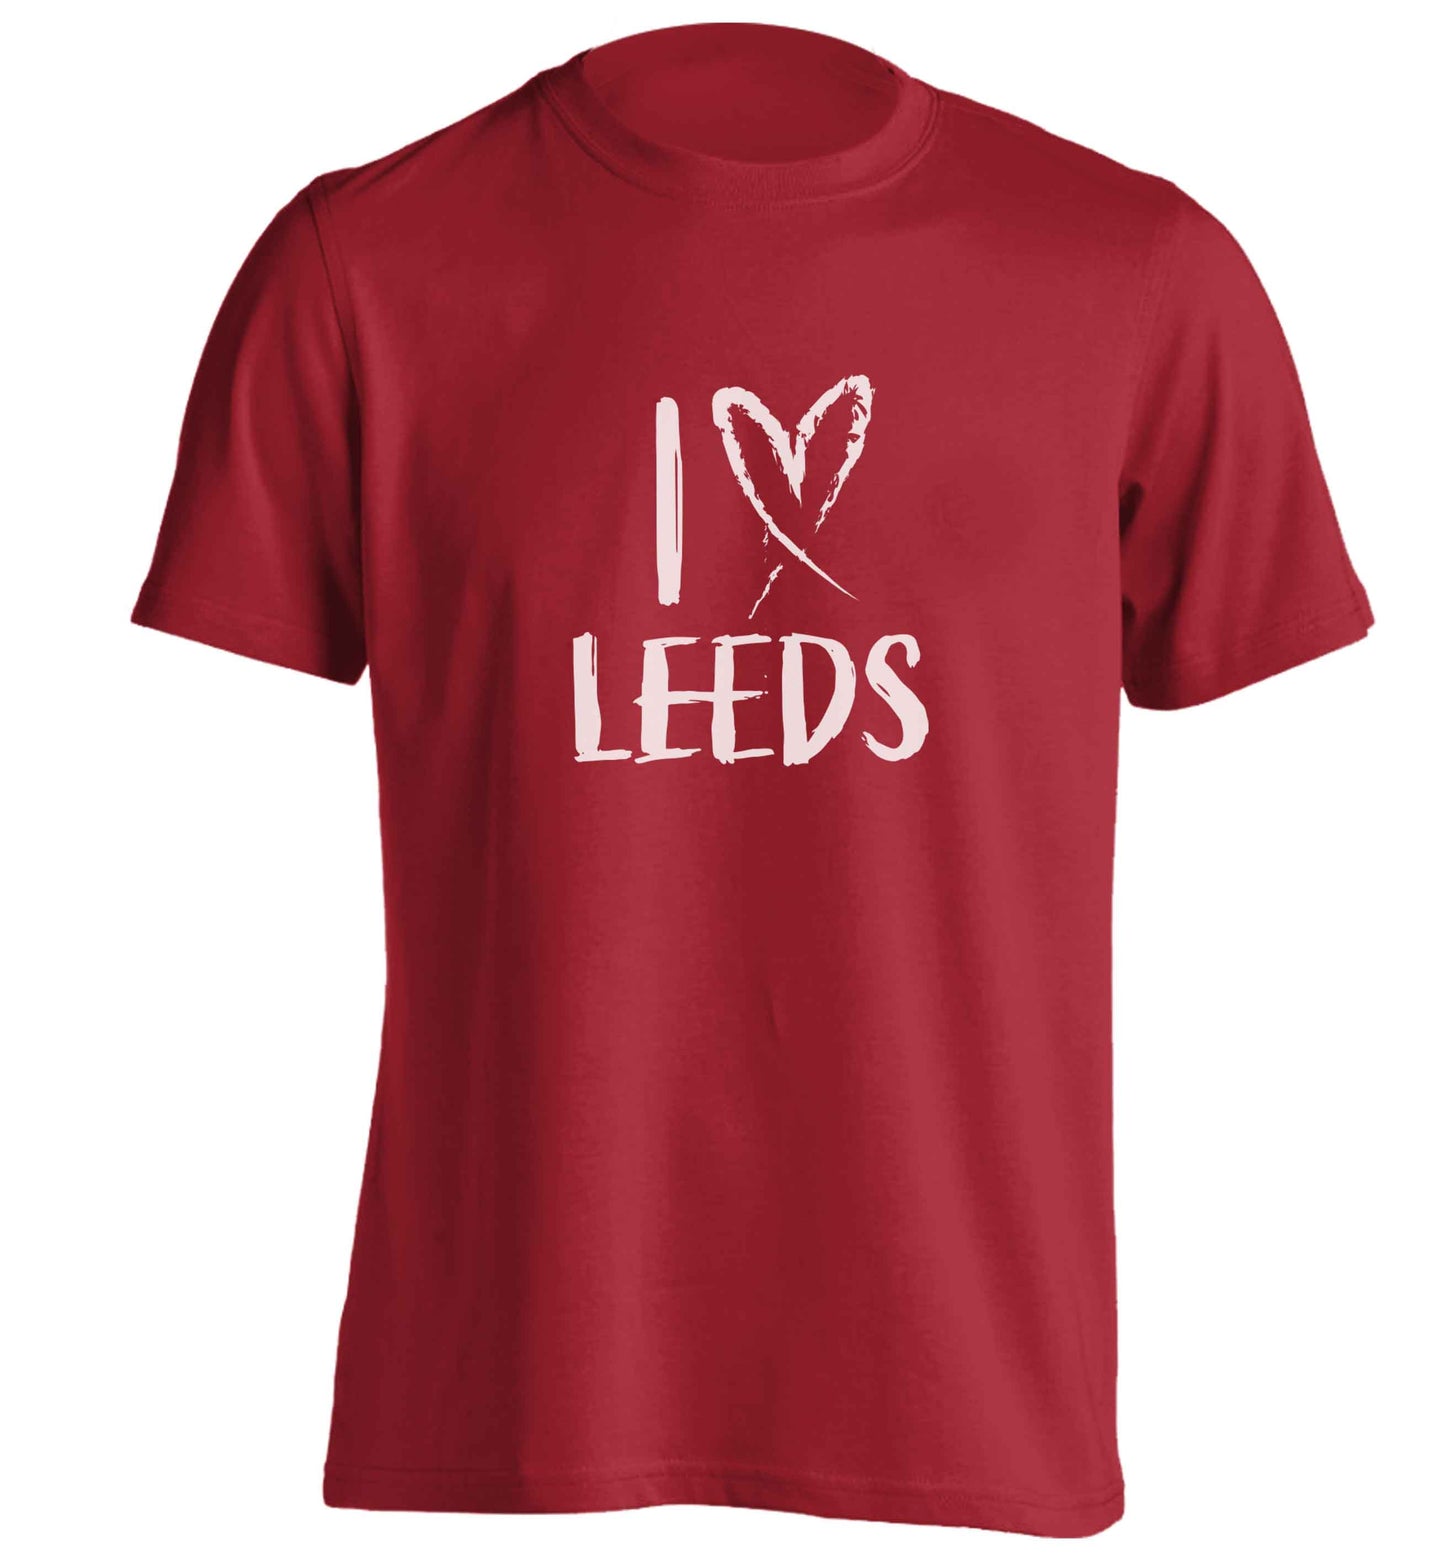 I love Leeds adults unisex red Tshirt 2XL